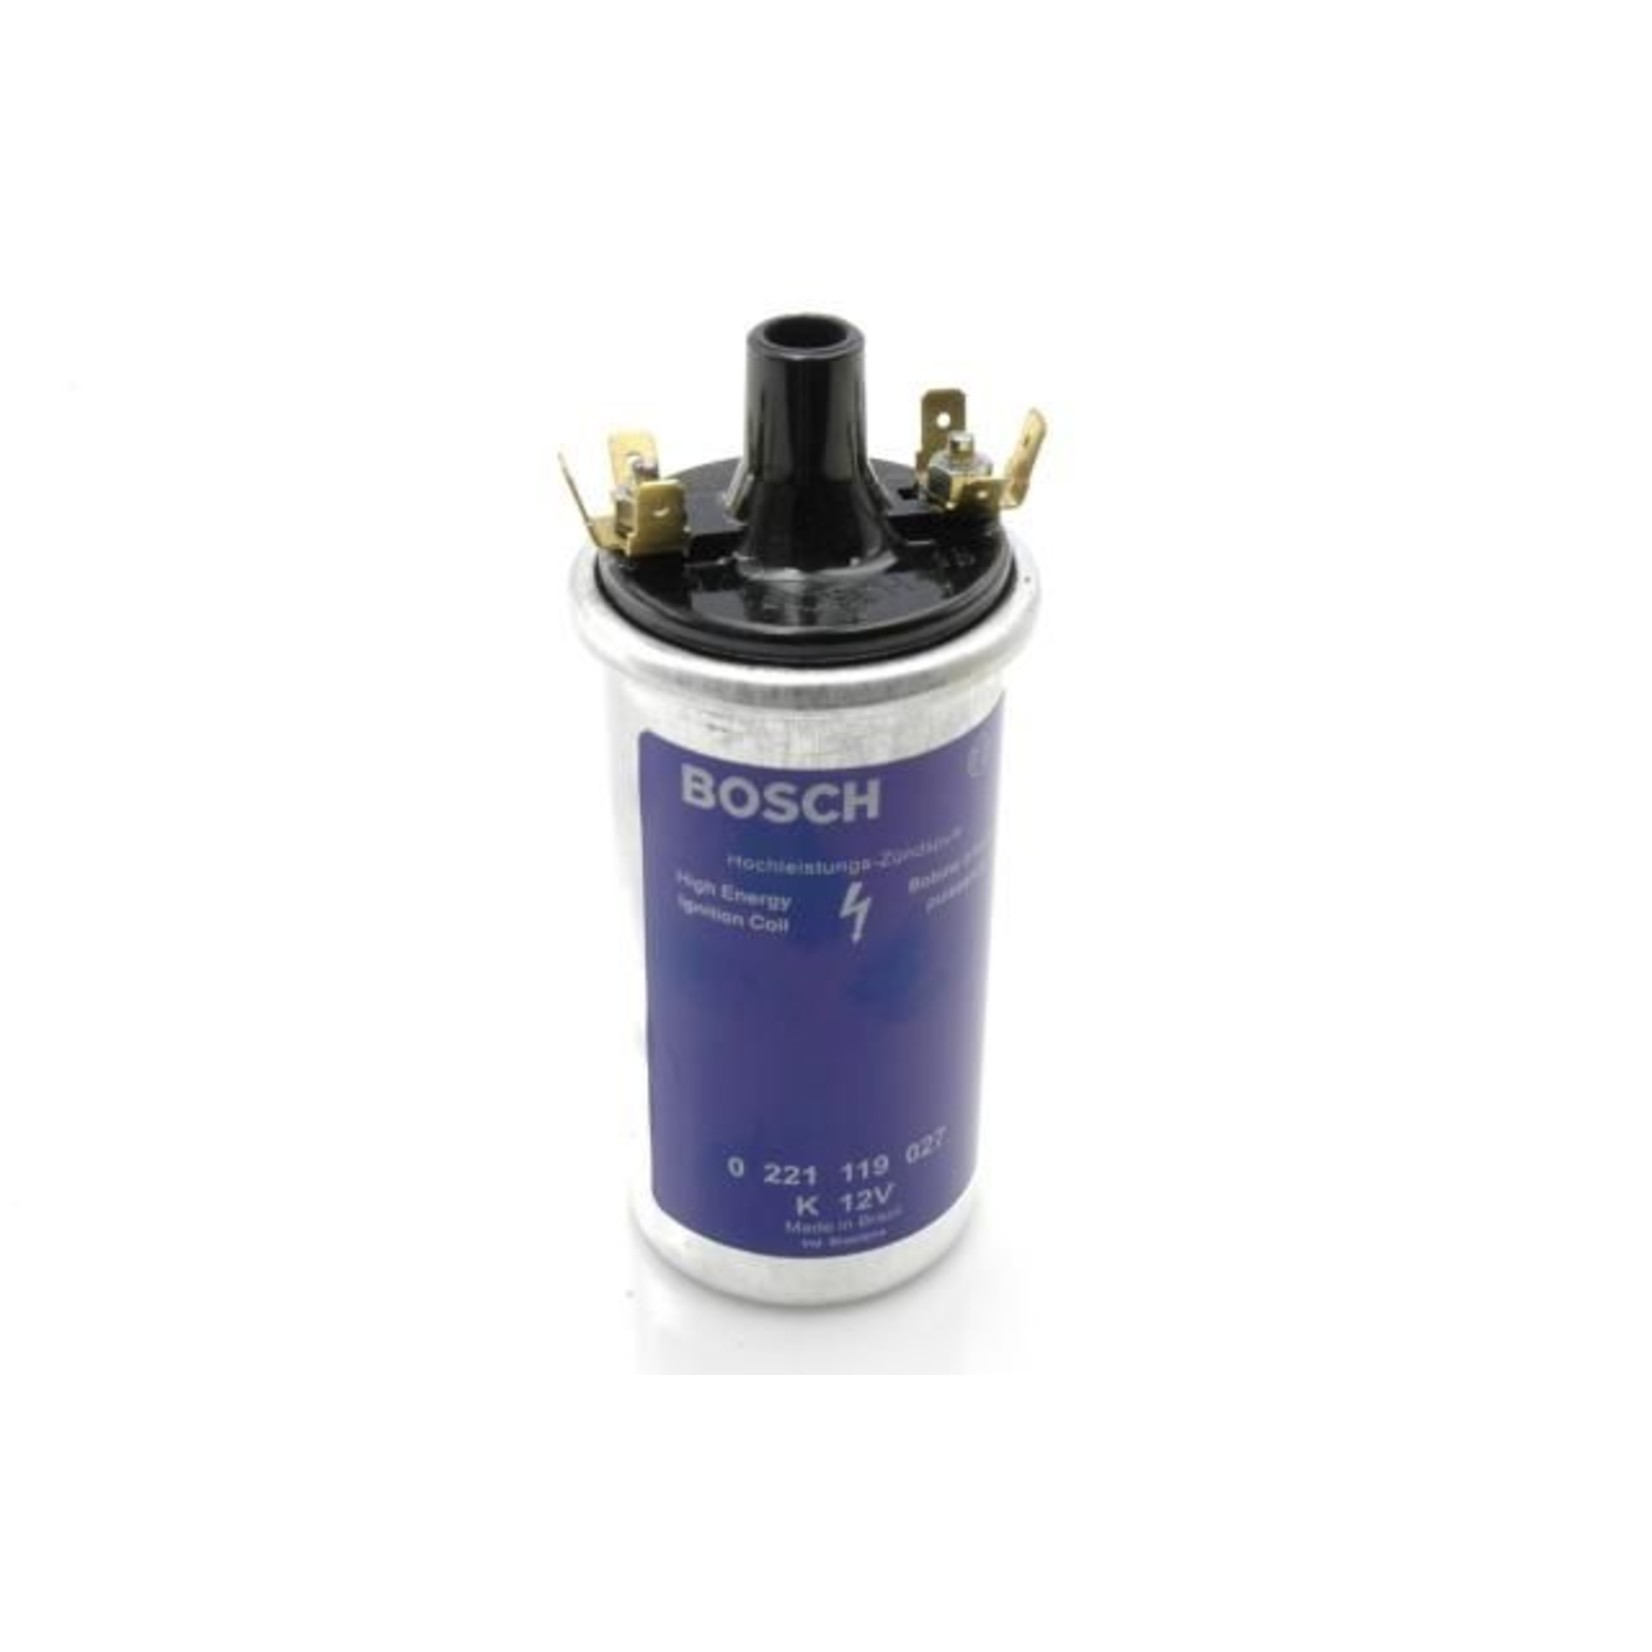 Ignition coil without resistance 12V Bosch Nr Org: DM212088